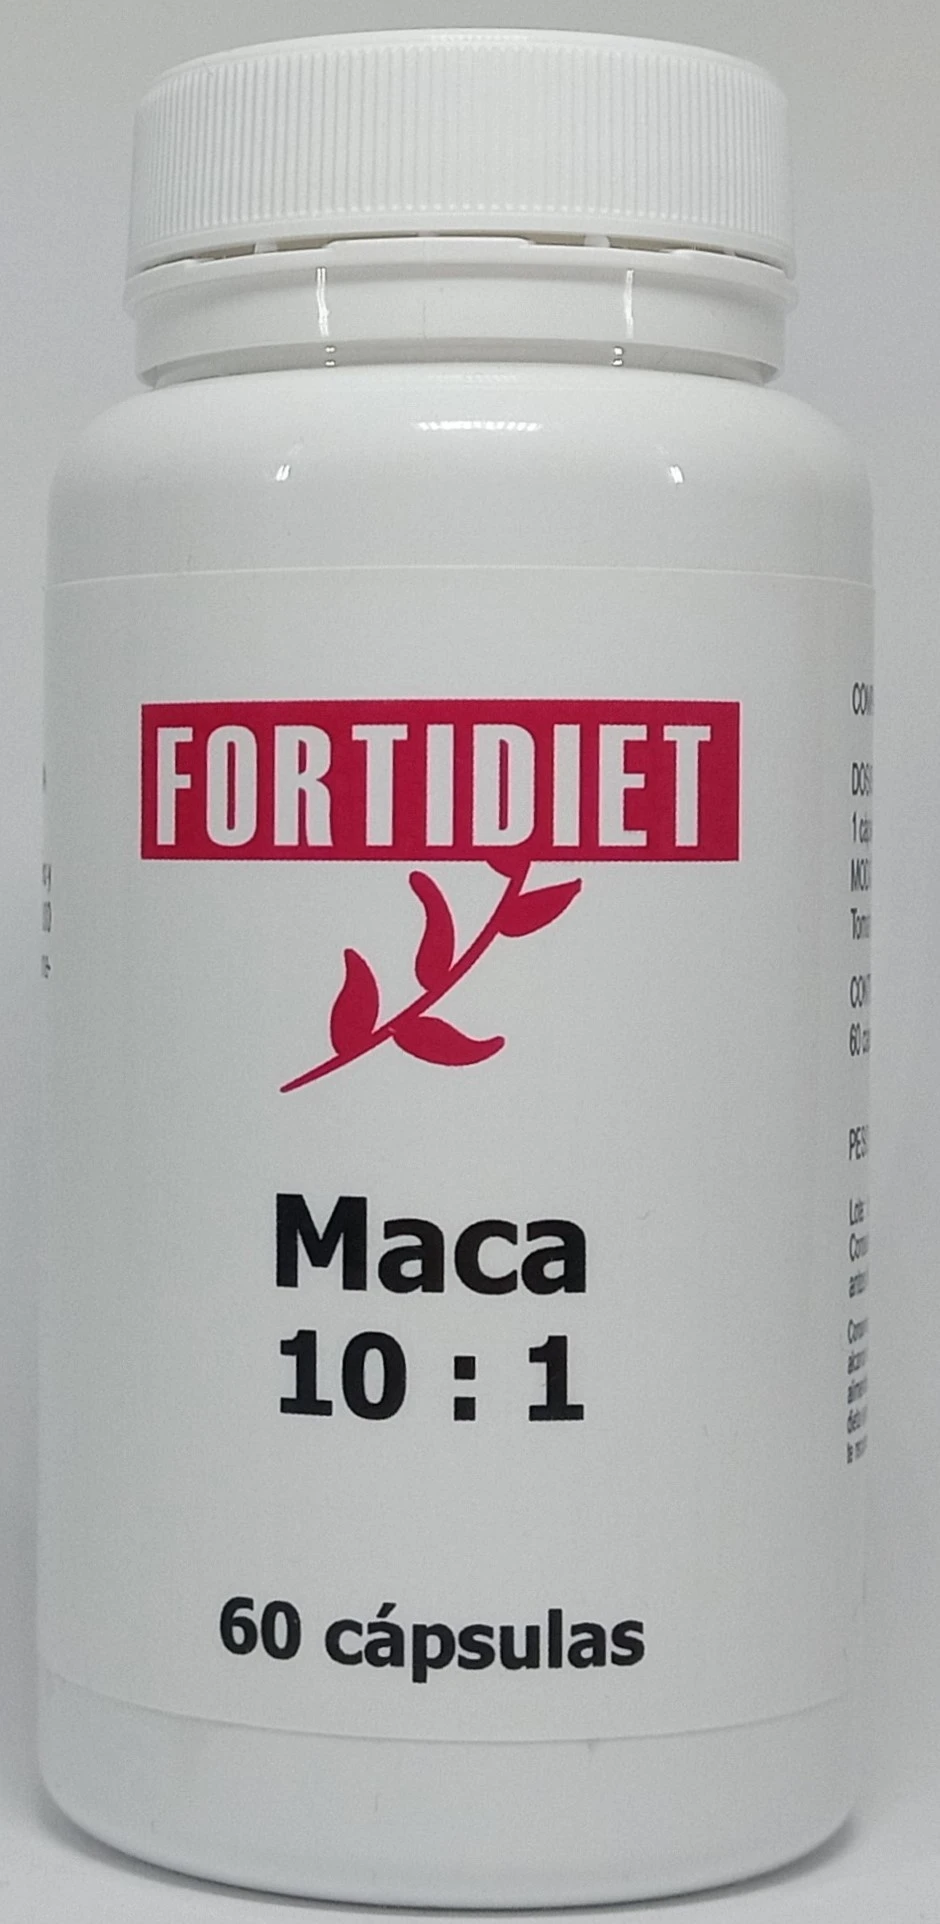 Fortidiet Maca andina (10:1) 60 caps.